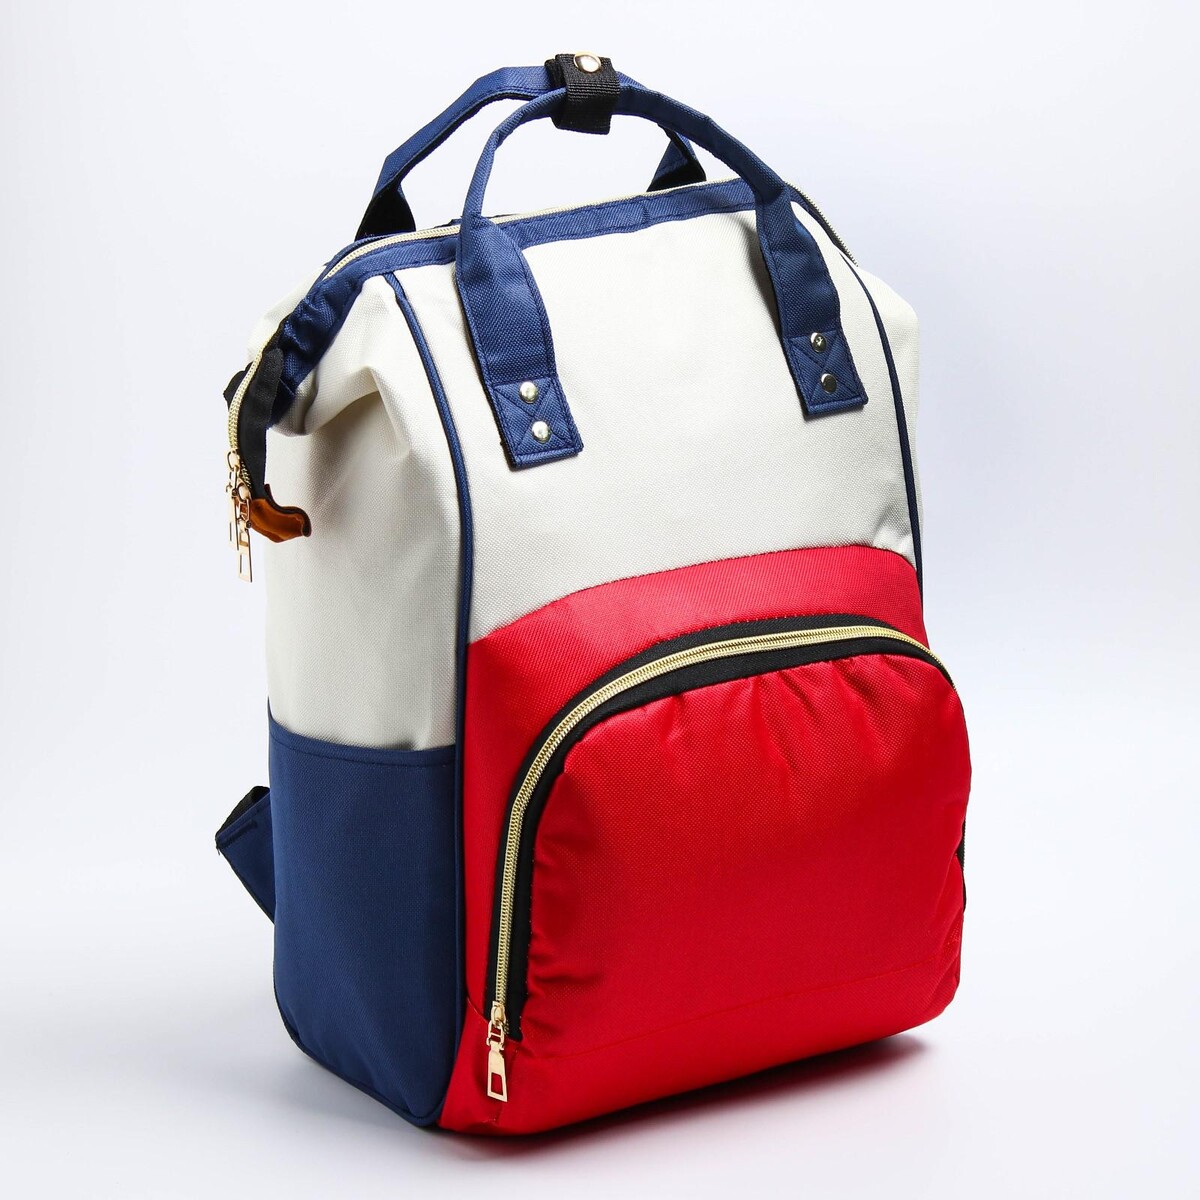 Рюкзак женский с термокарманом, термосумка - портфель, цвет красный рюкзак женский с термокарманом термосумка портфель синий